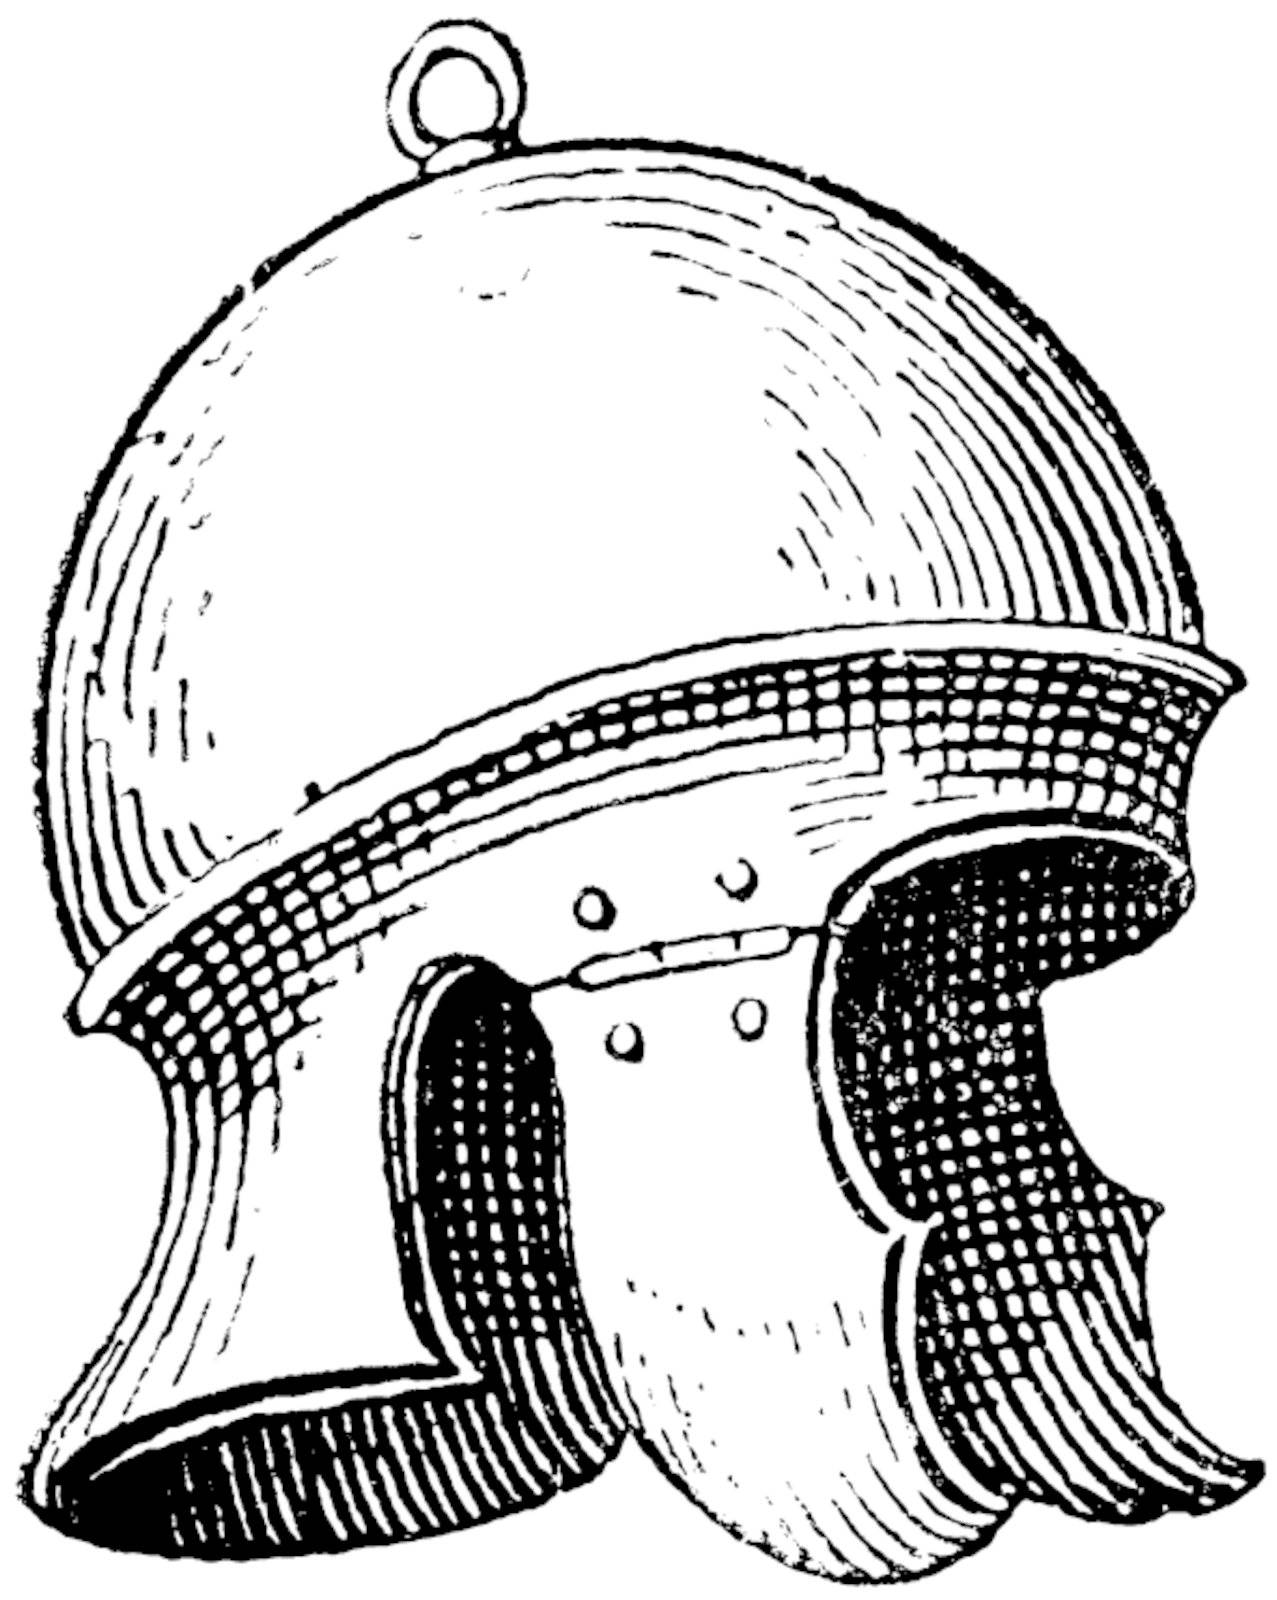 Roman legionnaire's helmet or galea vintage engraving by Morphart